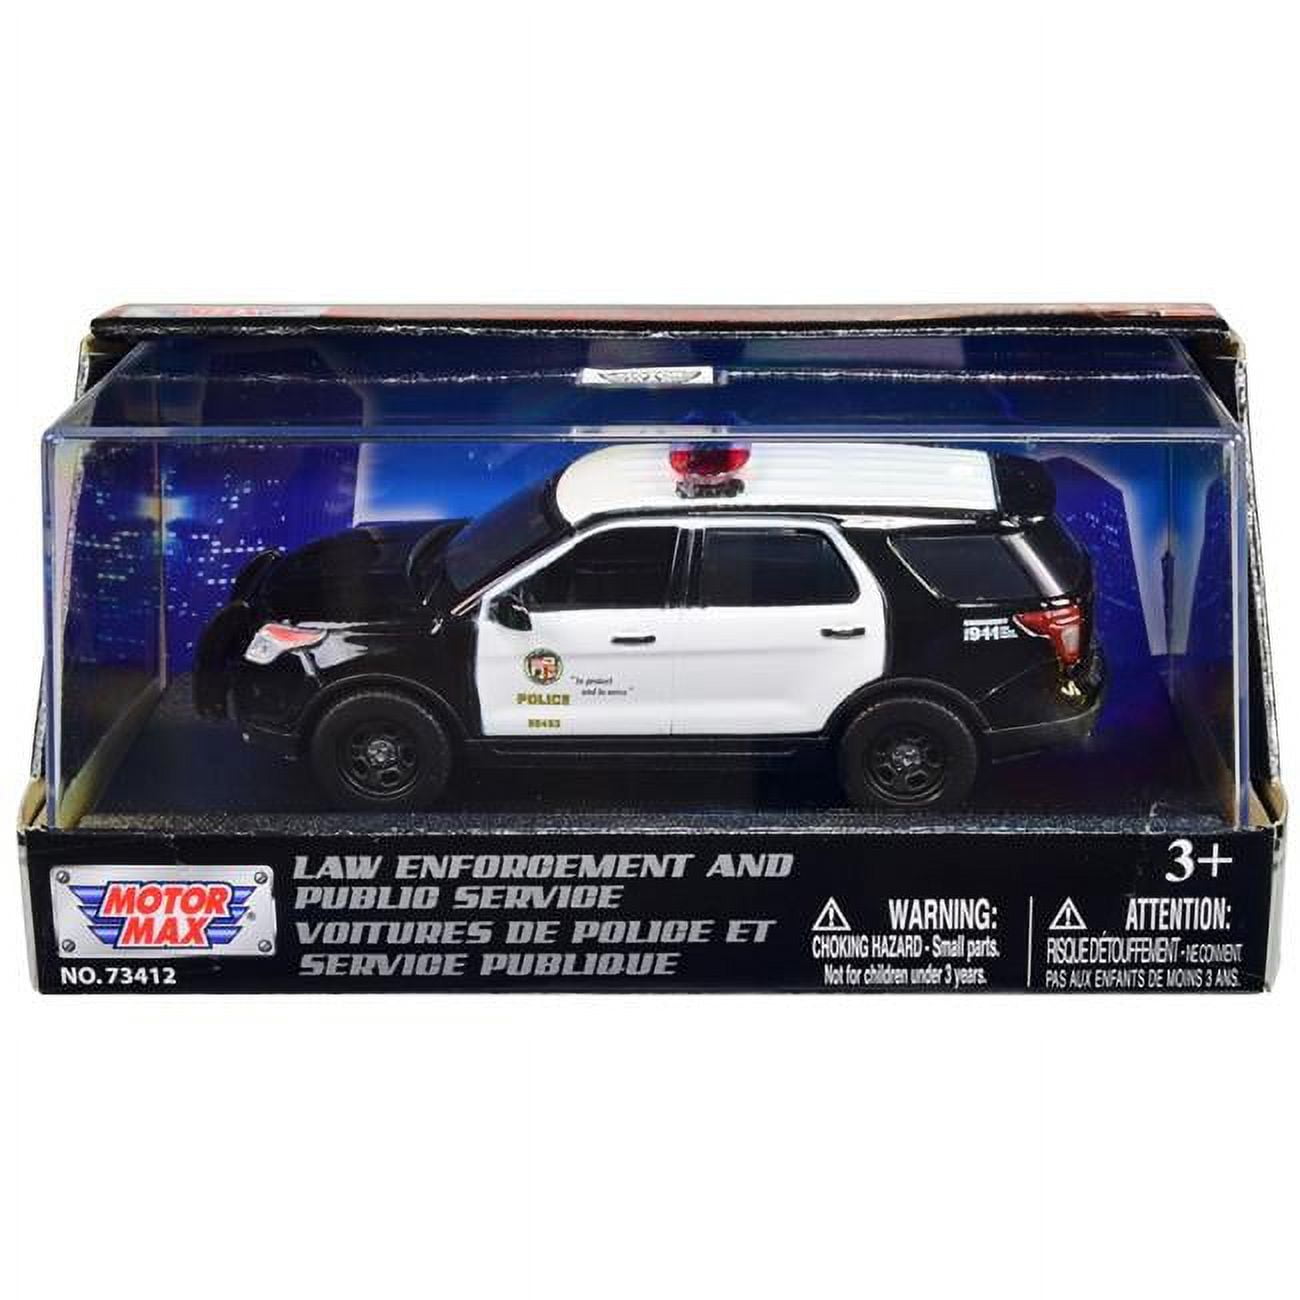 79493 2015 Ford Police Interceptor Utility LAPD Los Angeles Police Department 1-43 Diecast Model Car, Black & White -  MOTORMAX